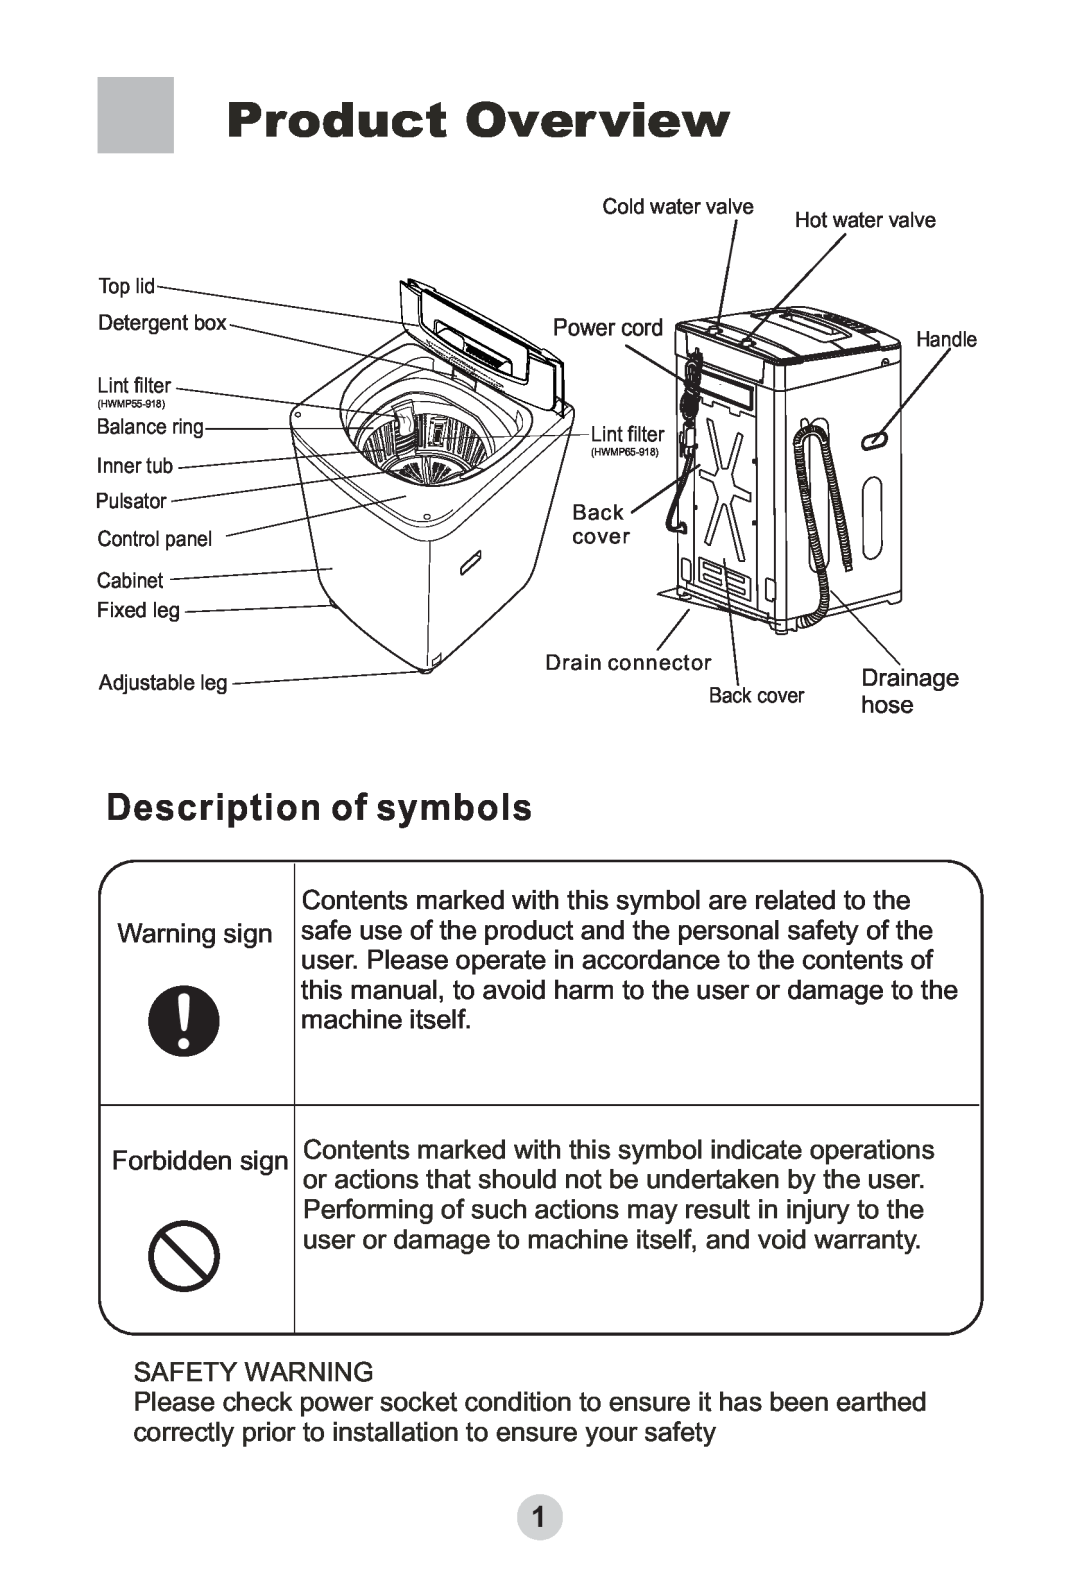 Haier HWMP65-918 user manual Product Overview, Description of symbols 